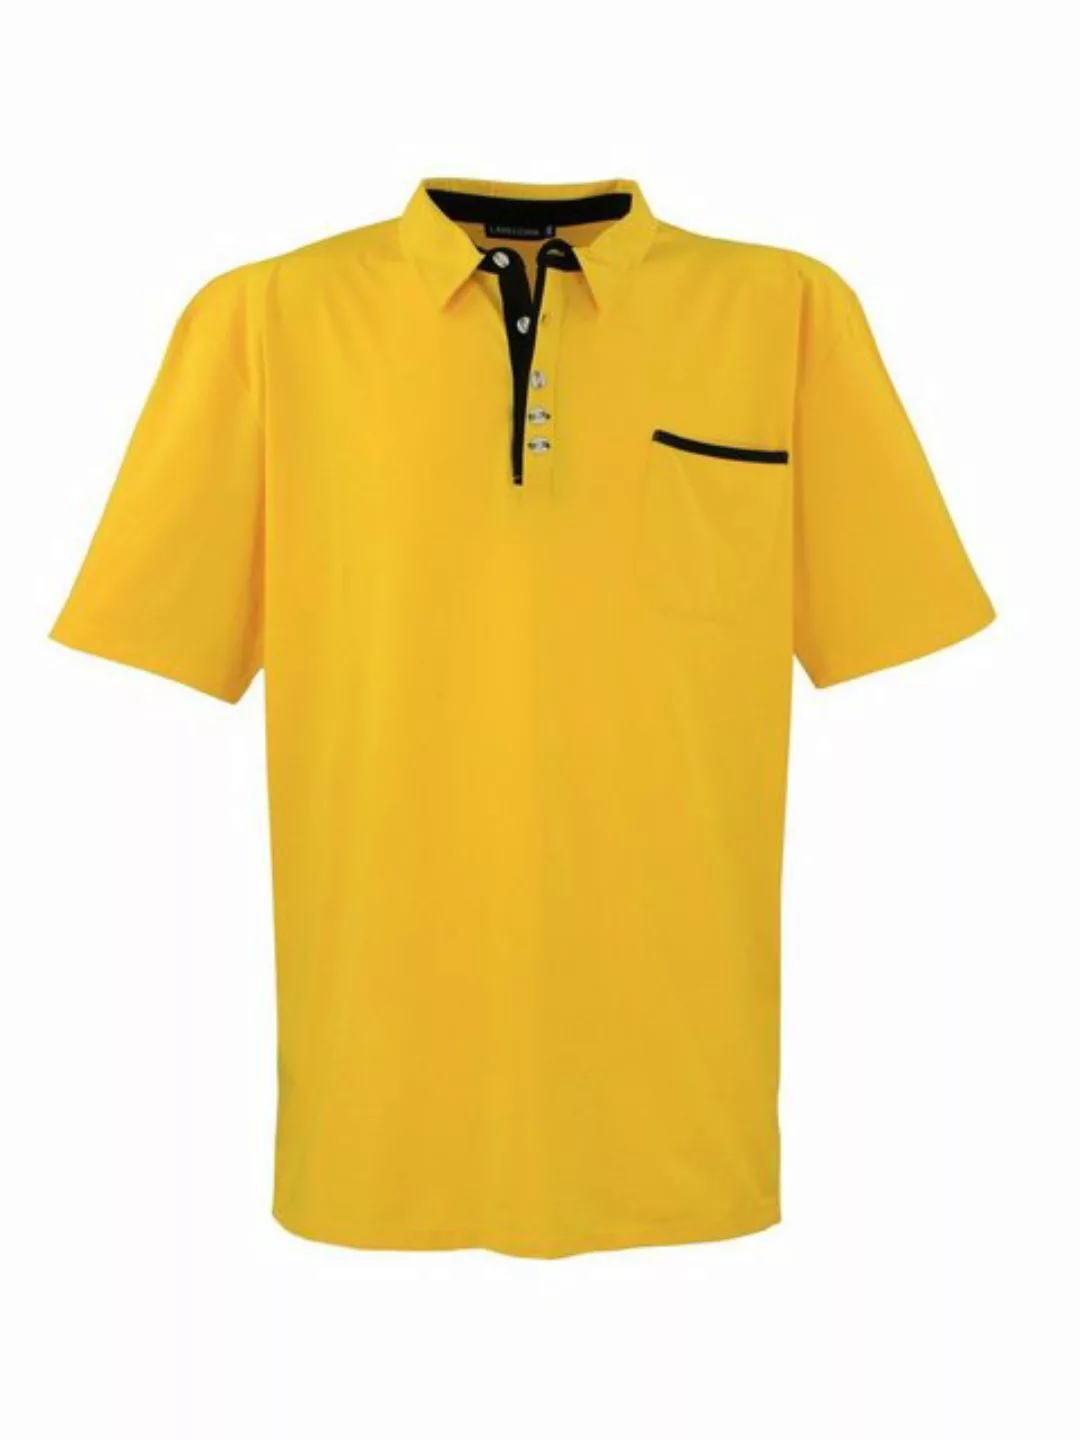 Lavecchia Poloshirt Übergrößen Herren Polo Shirt LV-1701 Herren Polo Shirt günstig online kaufen